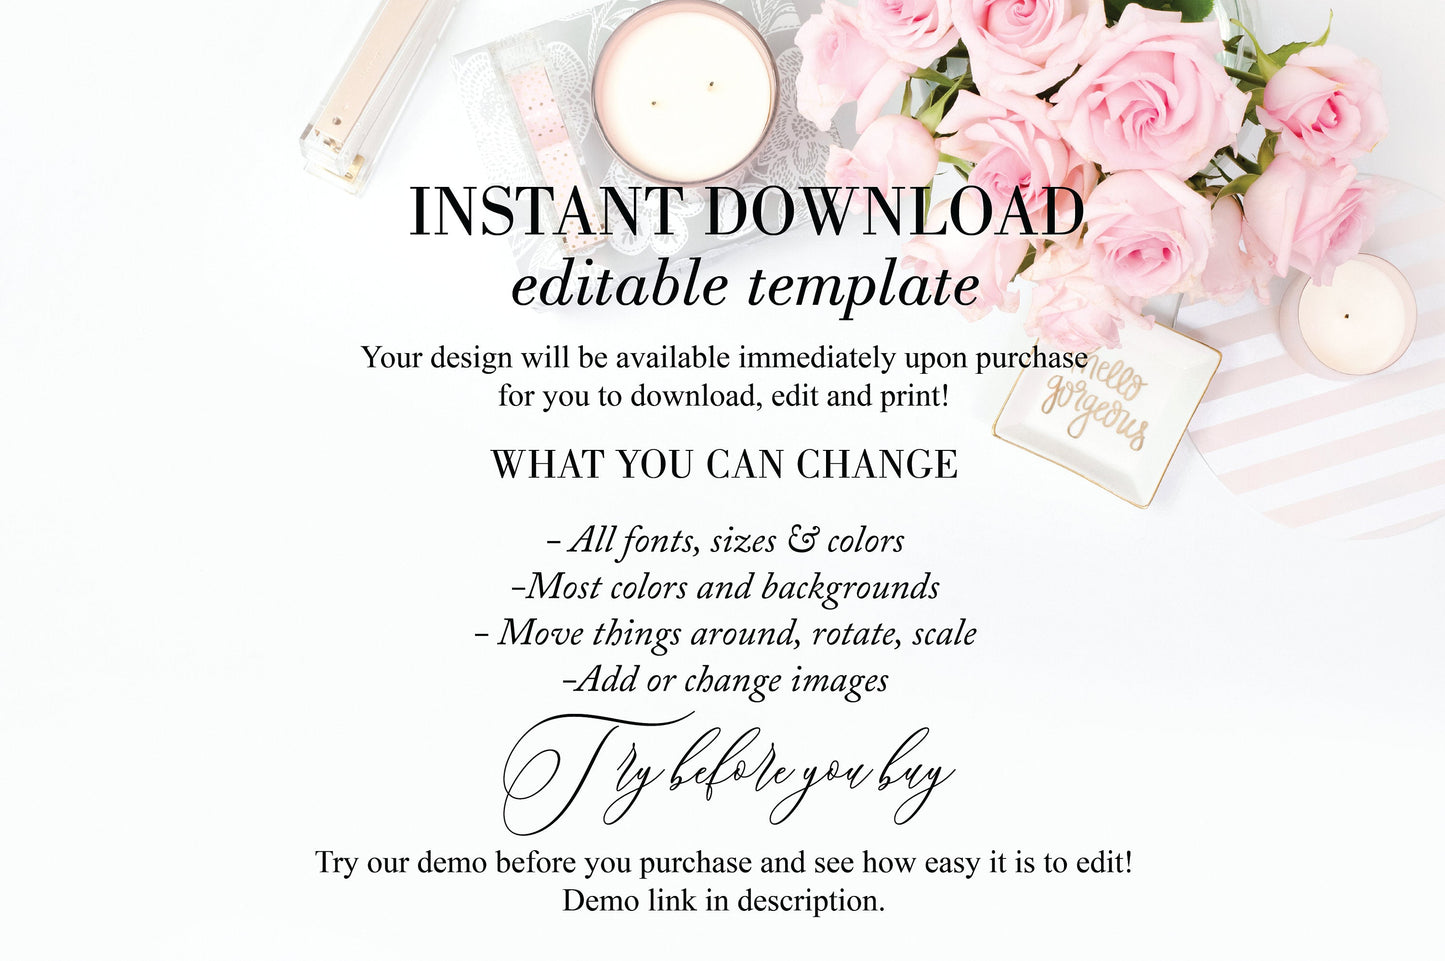 Minimalist Wedding Menu Printable Personalized Wedding Menu Template Printable Menu Card Instant Download Editable Templett - DONNA MENU|PROGRAMS|TIMELINE SAVVY PAPER CO